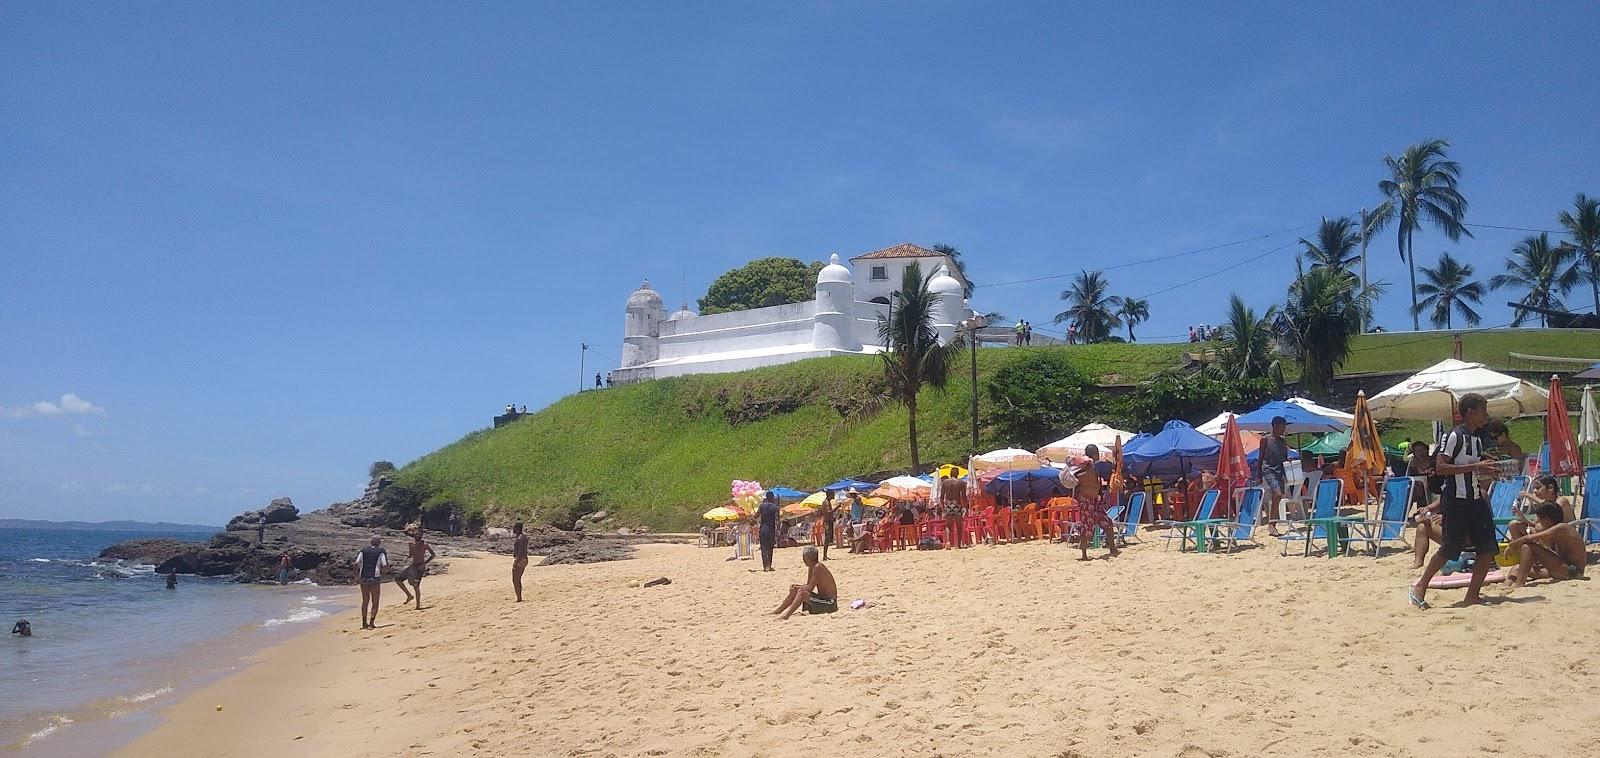 Sandee - Praia Da Boa Viagem - Bahia